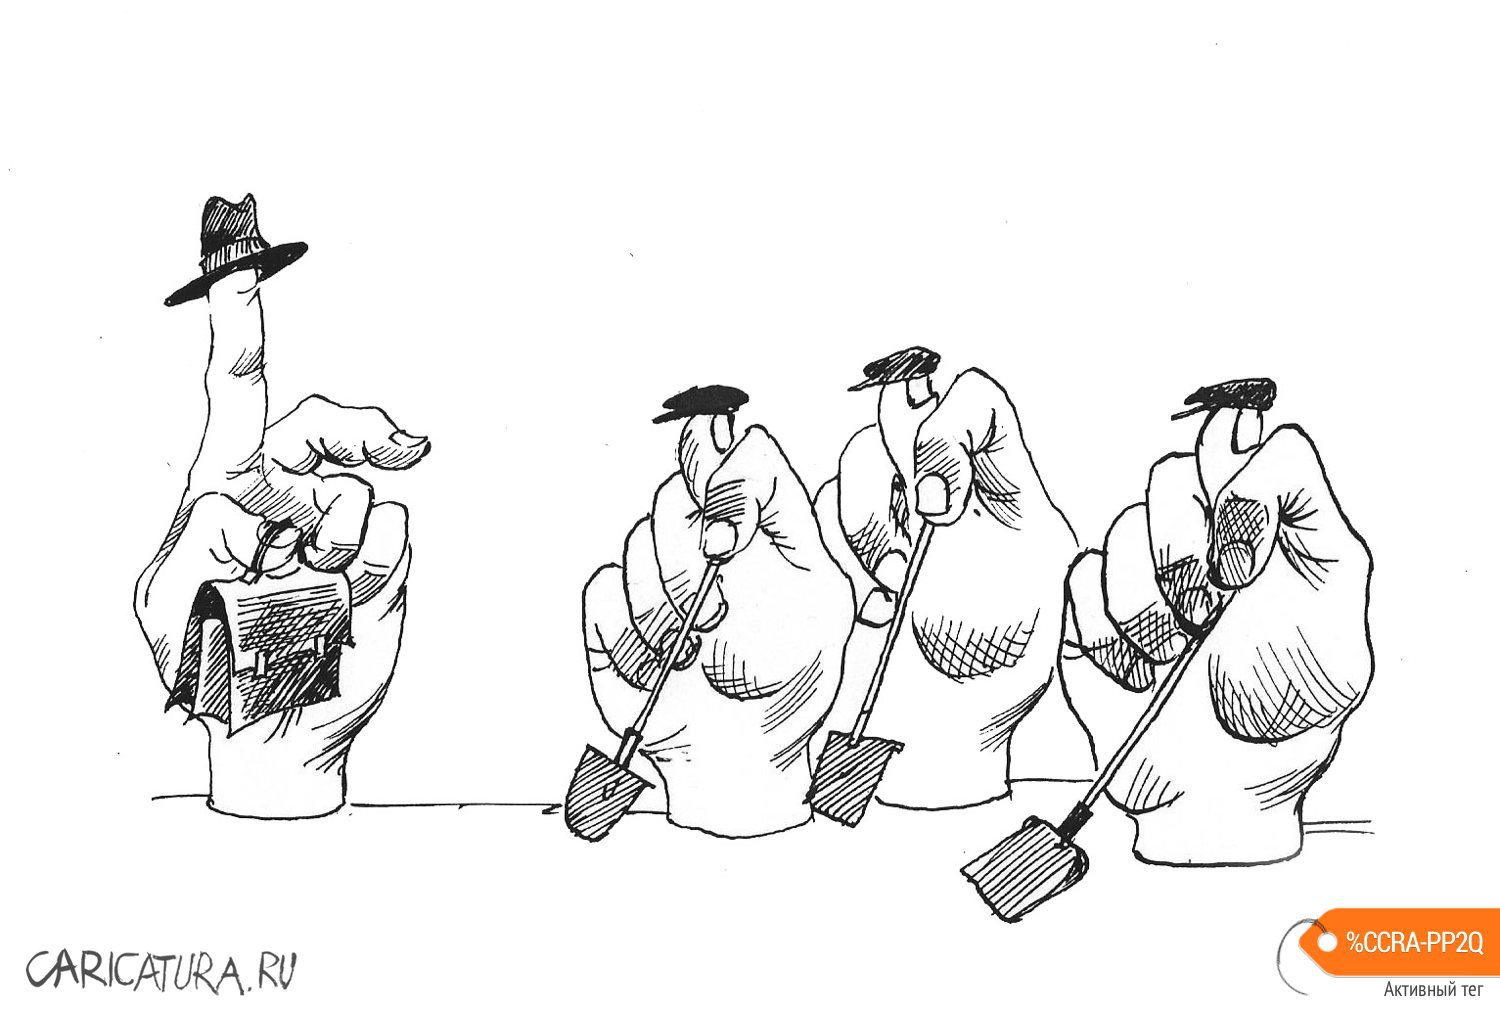 Карикатура "Руководство", Александр Шульпинов